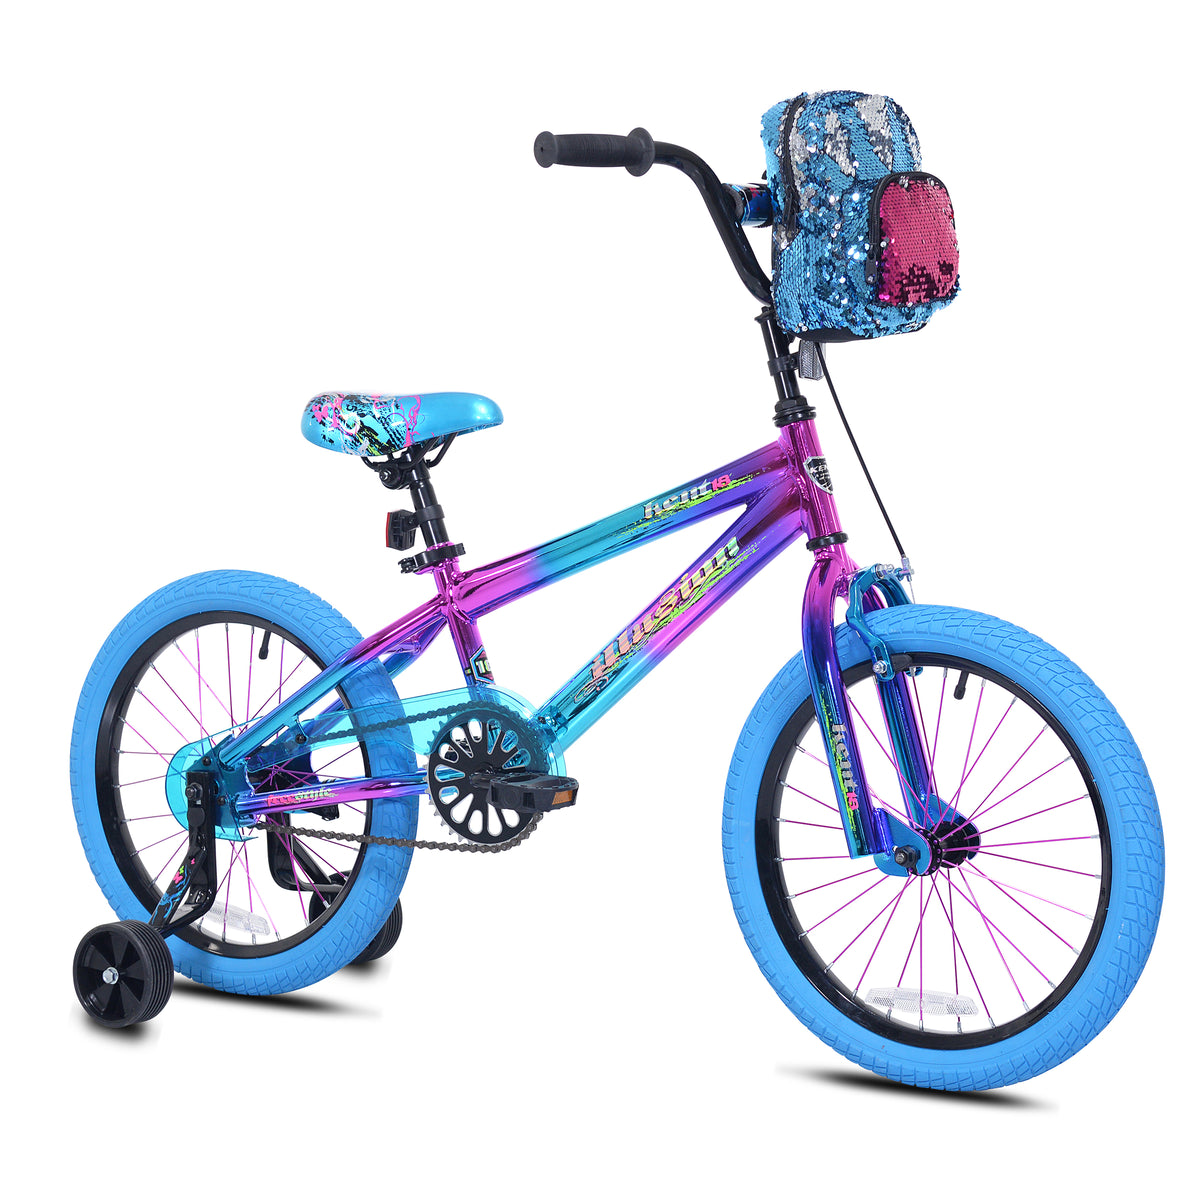 18" Kent Illusion | BMX Bike for Kids Ages 5-8